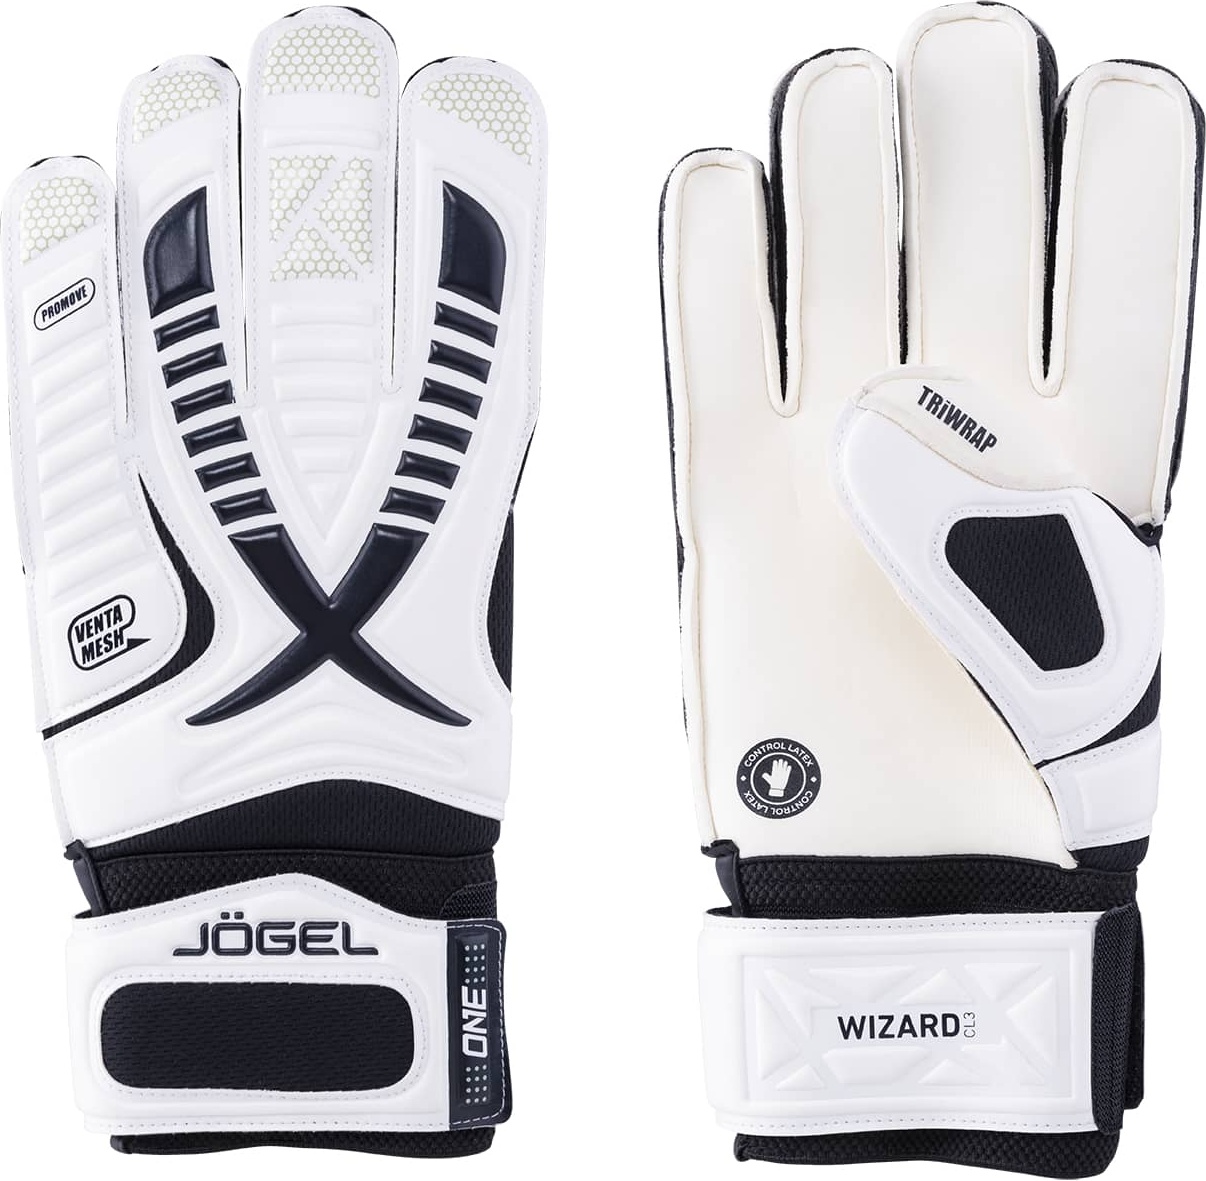 Вратарские перчатки Jogel One Wizard CL3 Flat, white/black, 7